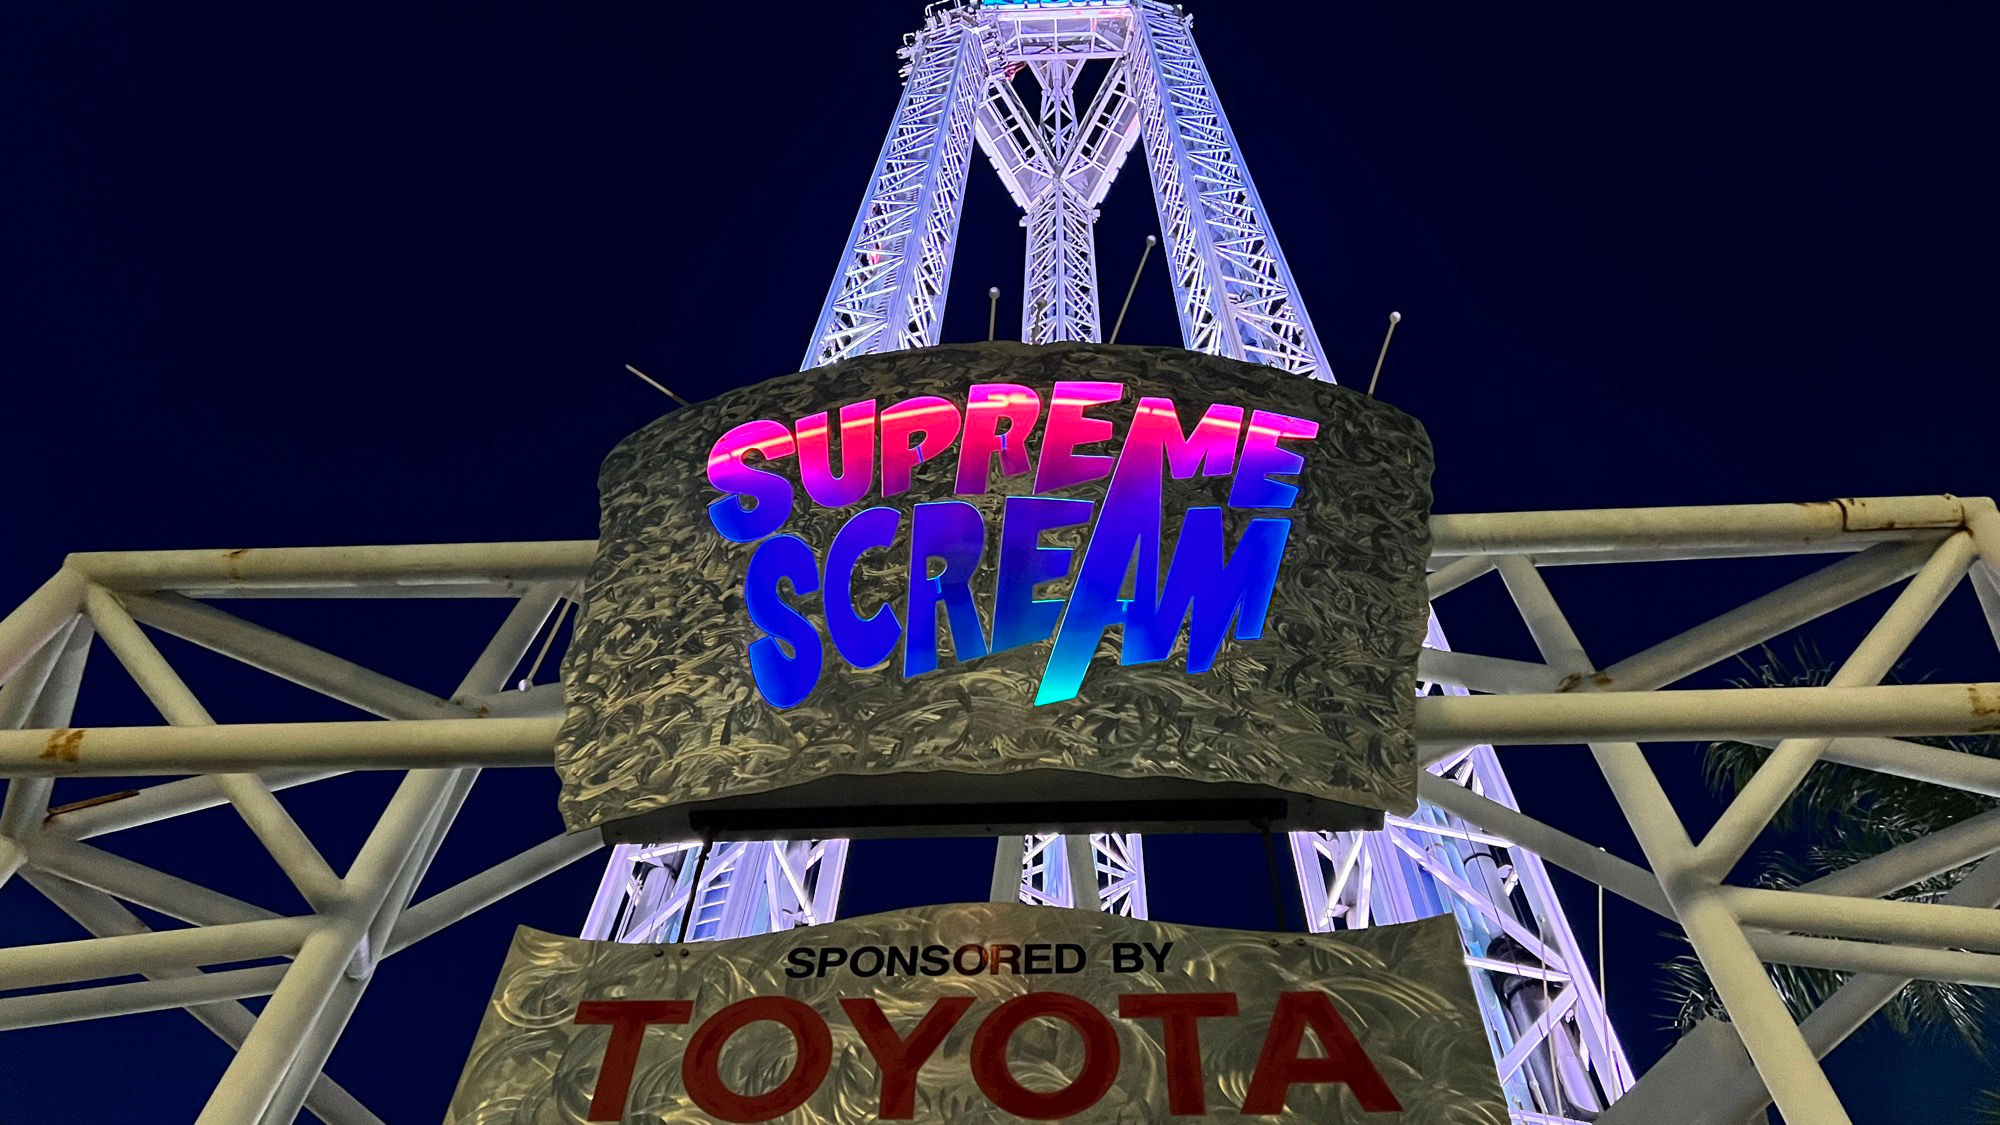 Supreme Scream Sponsored By Toyota